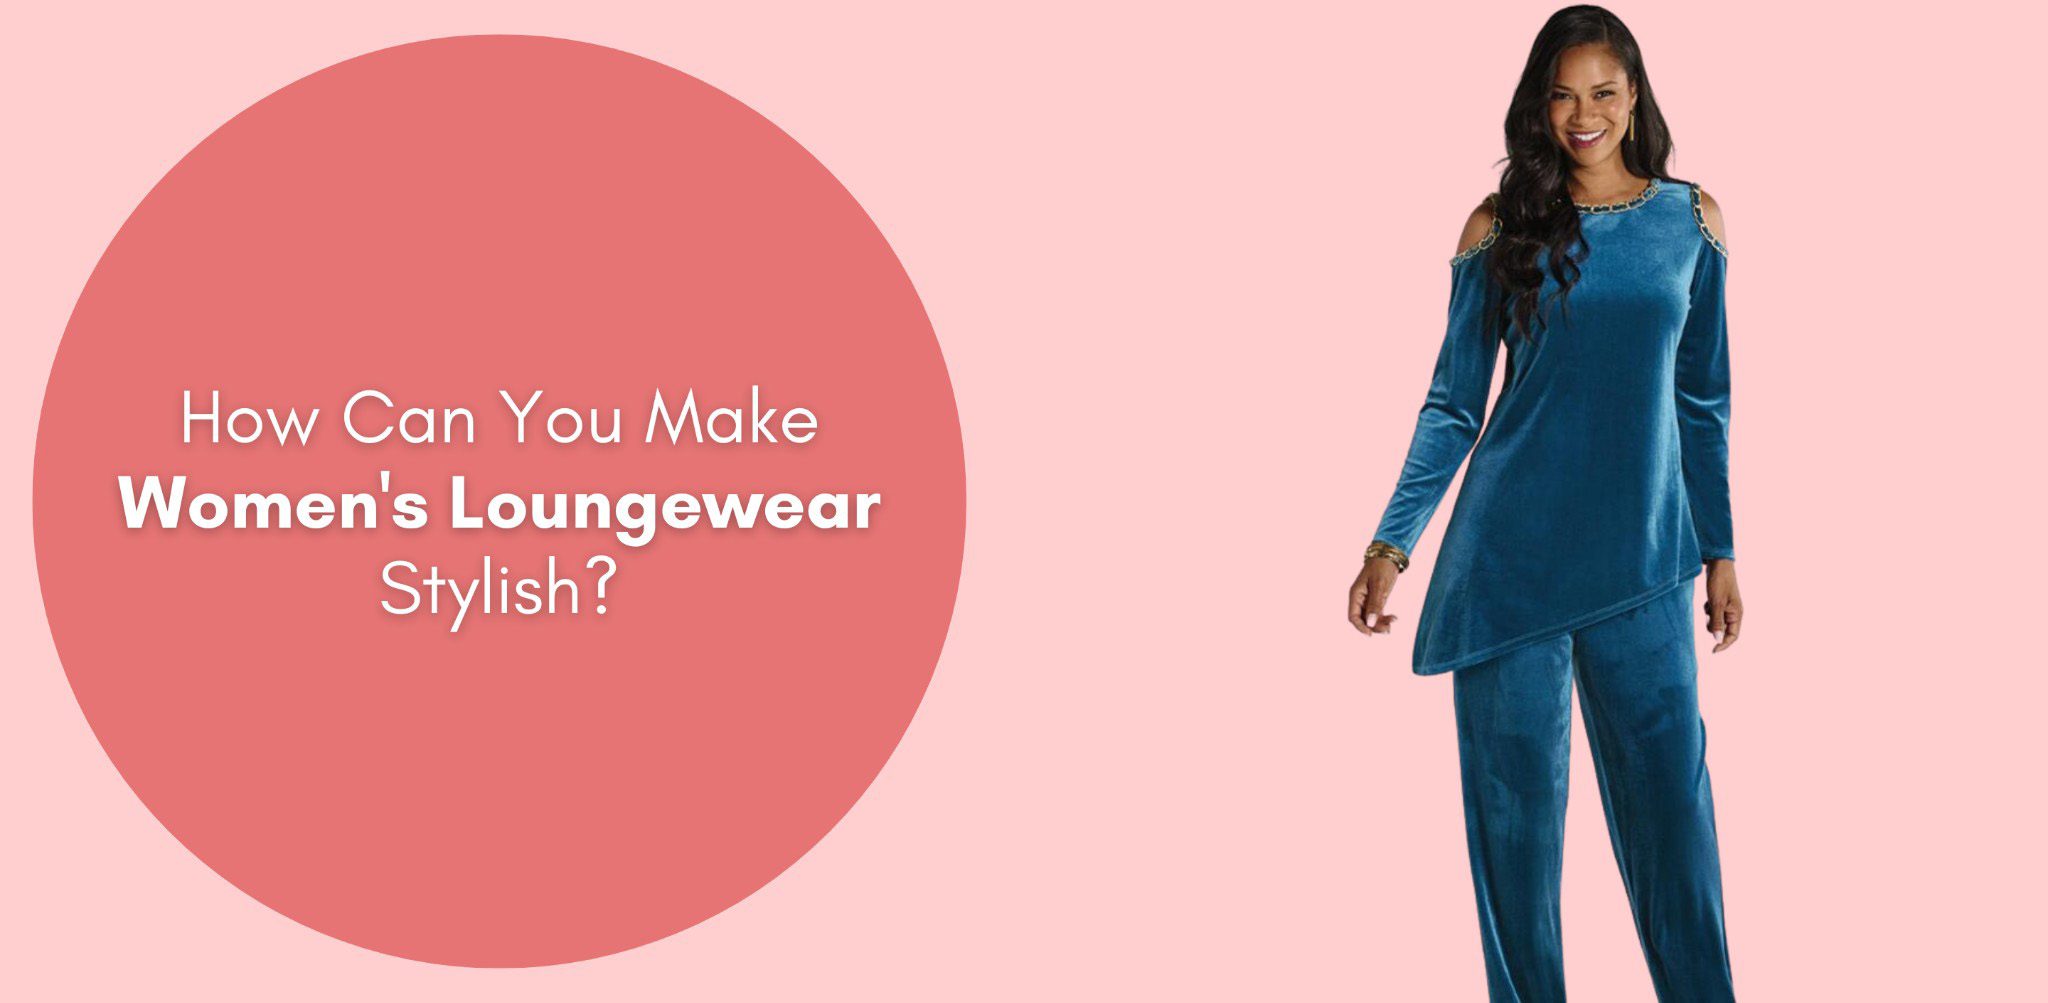 How Can You Make Women’s Loungewear Stylish?